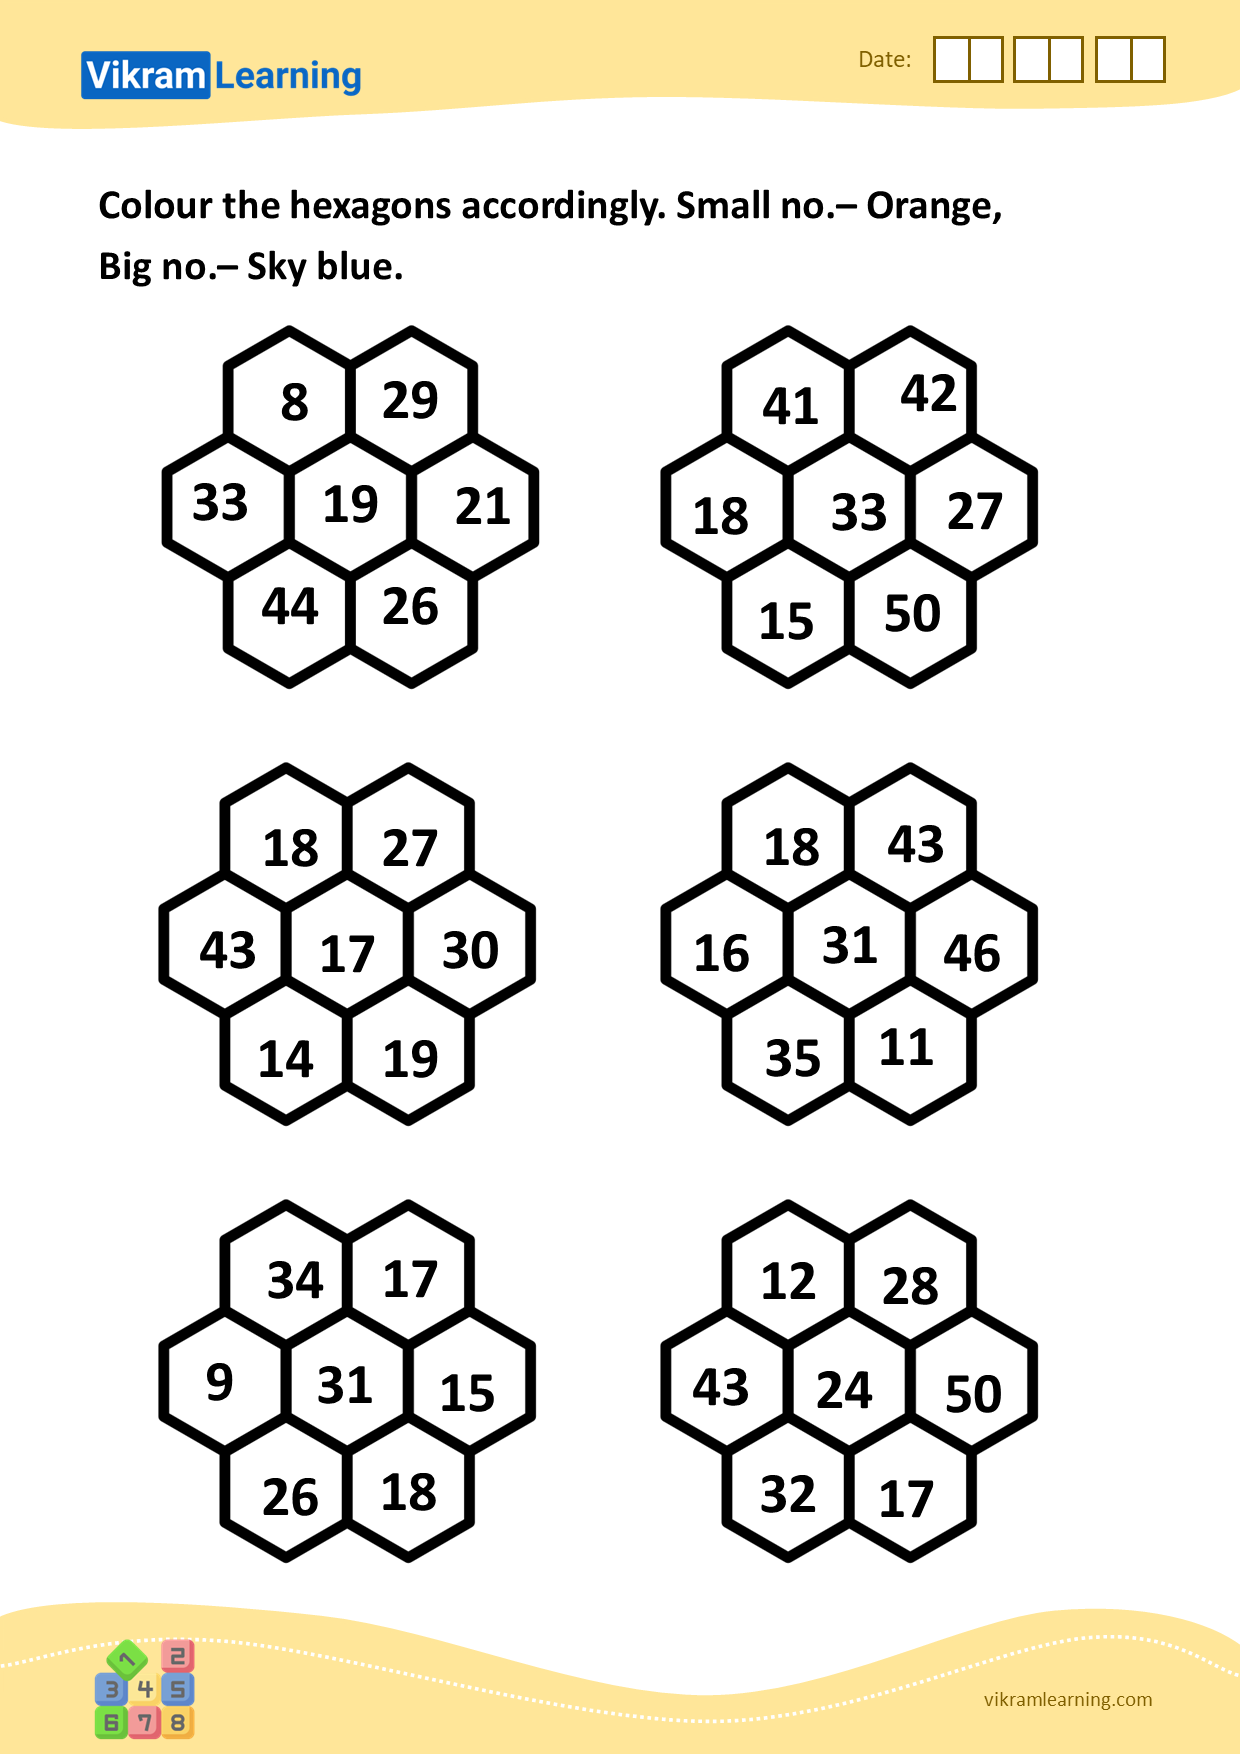 Download colour the hexagons accordingly. small no.– orange, big no.– sky blue worksheets